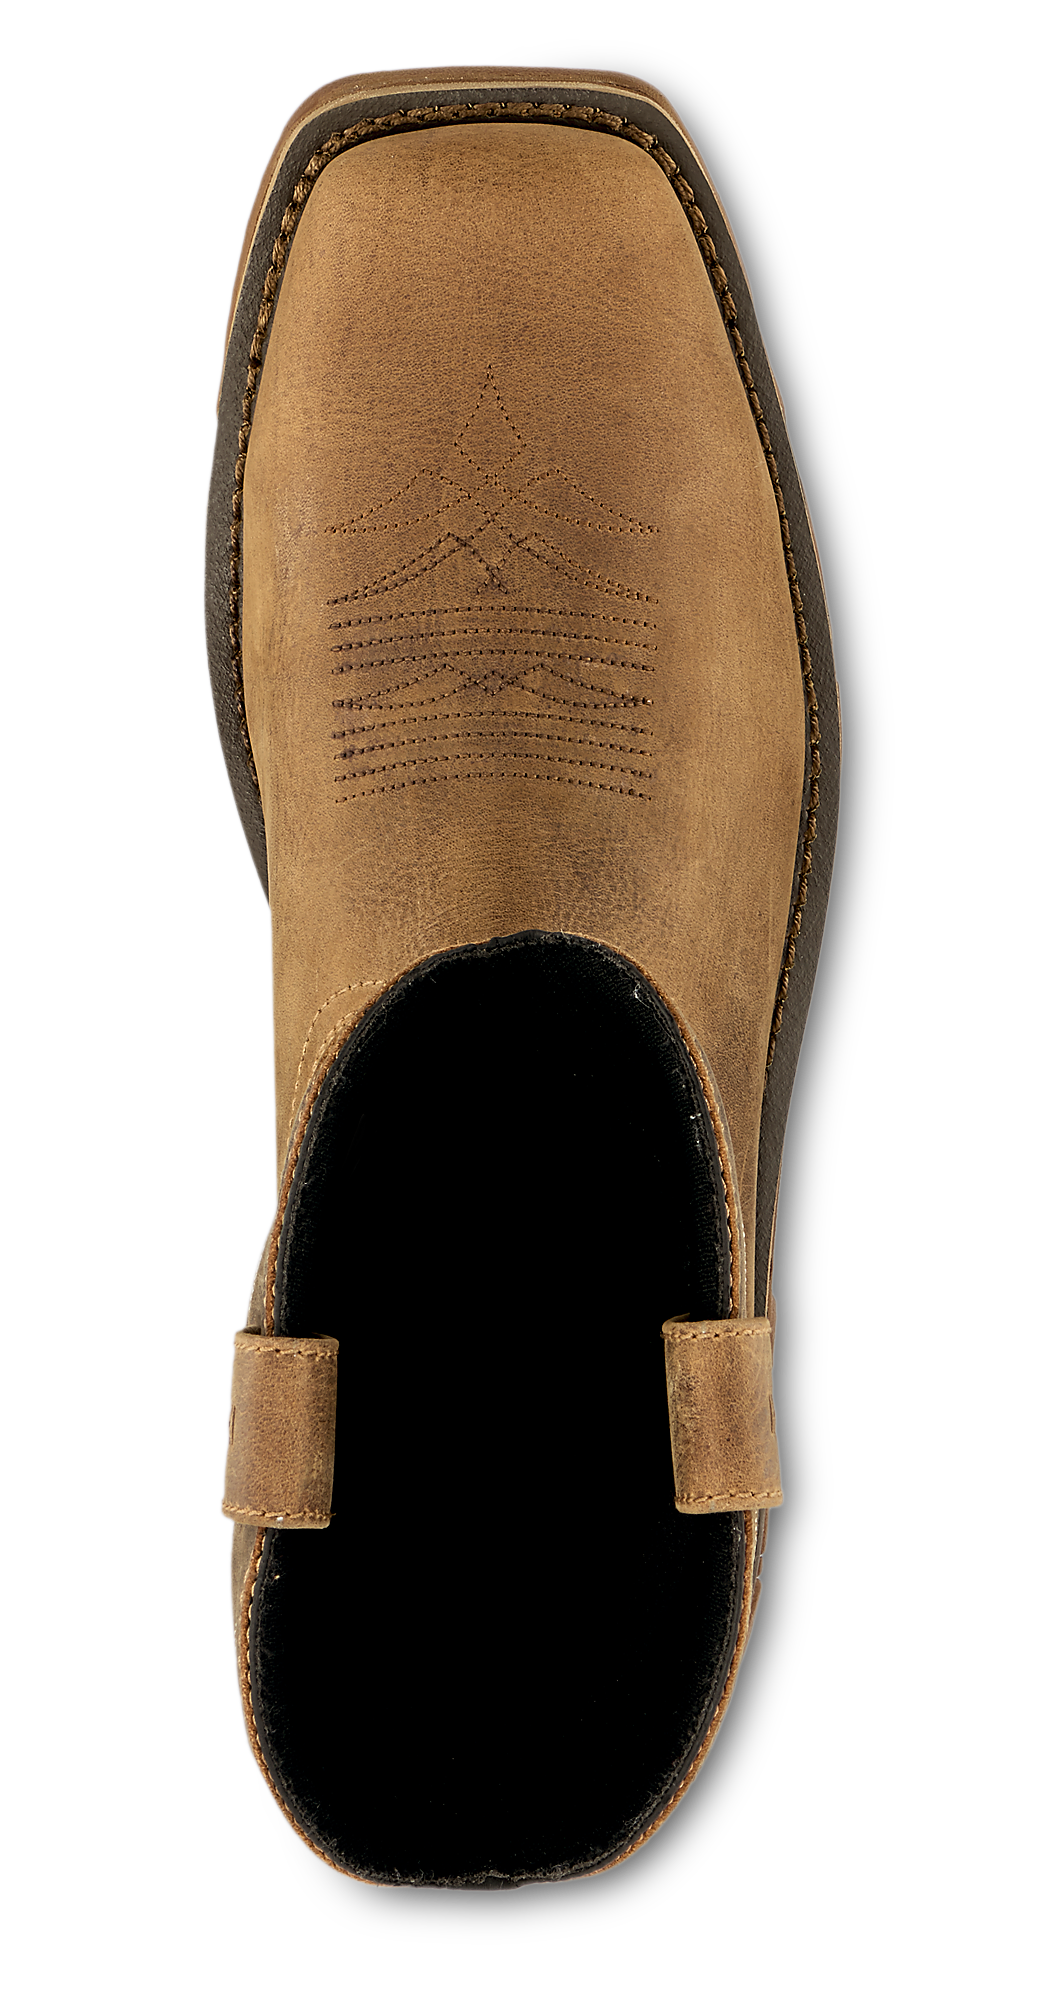 83912 -  Irish Setter Men's 11-inch Marshall Safety Toe Pull On Boots